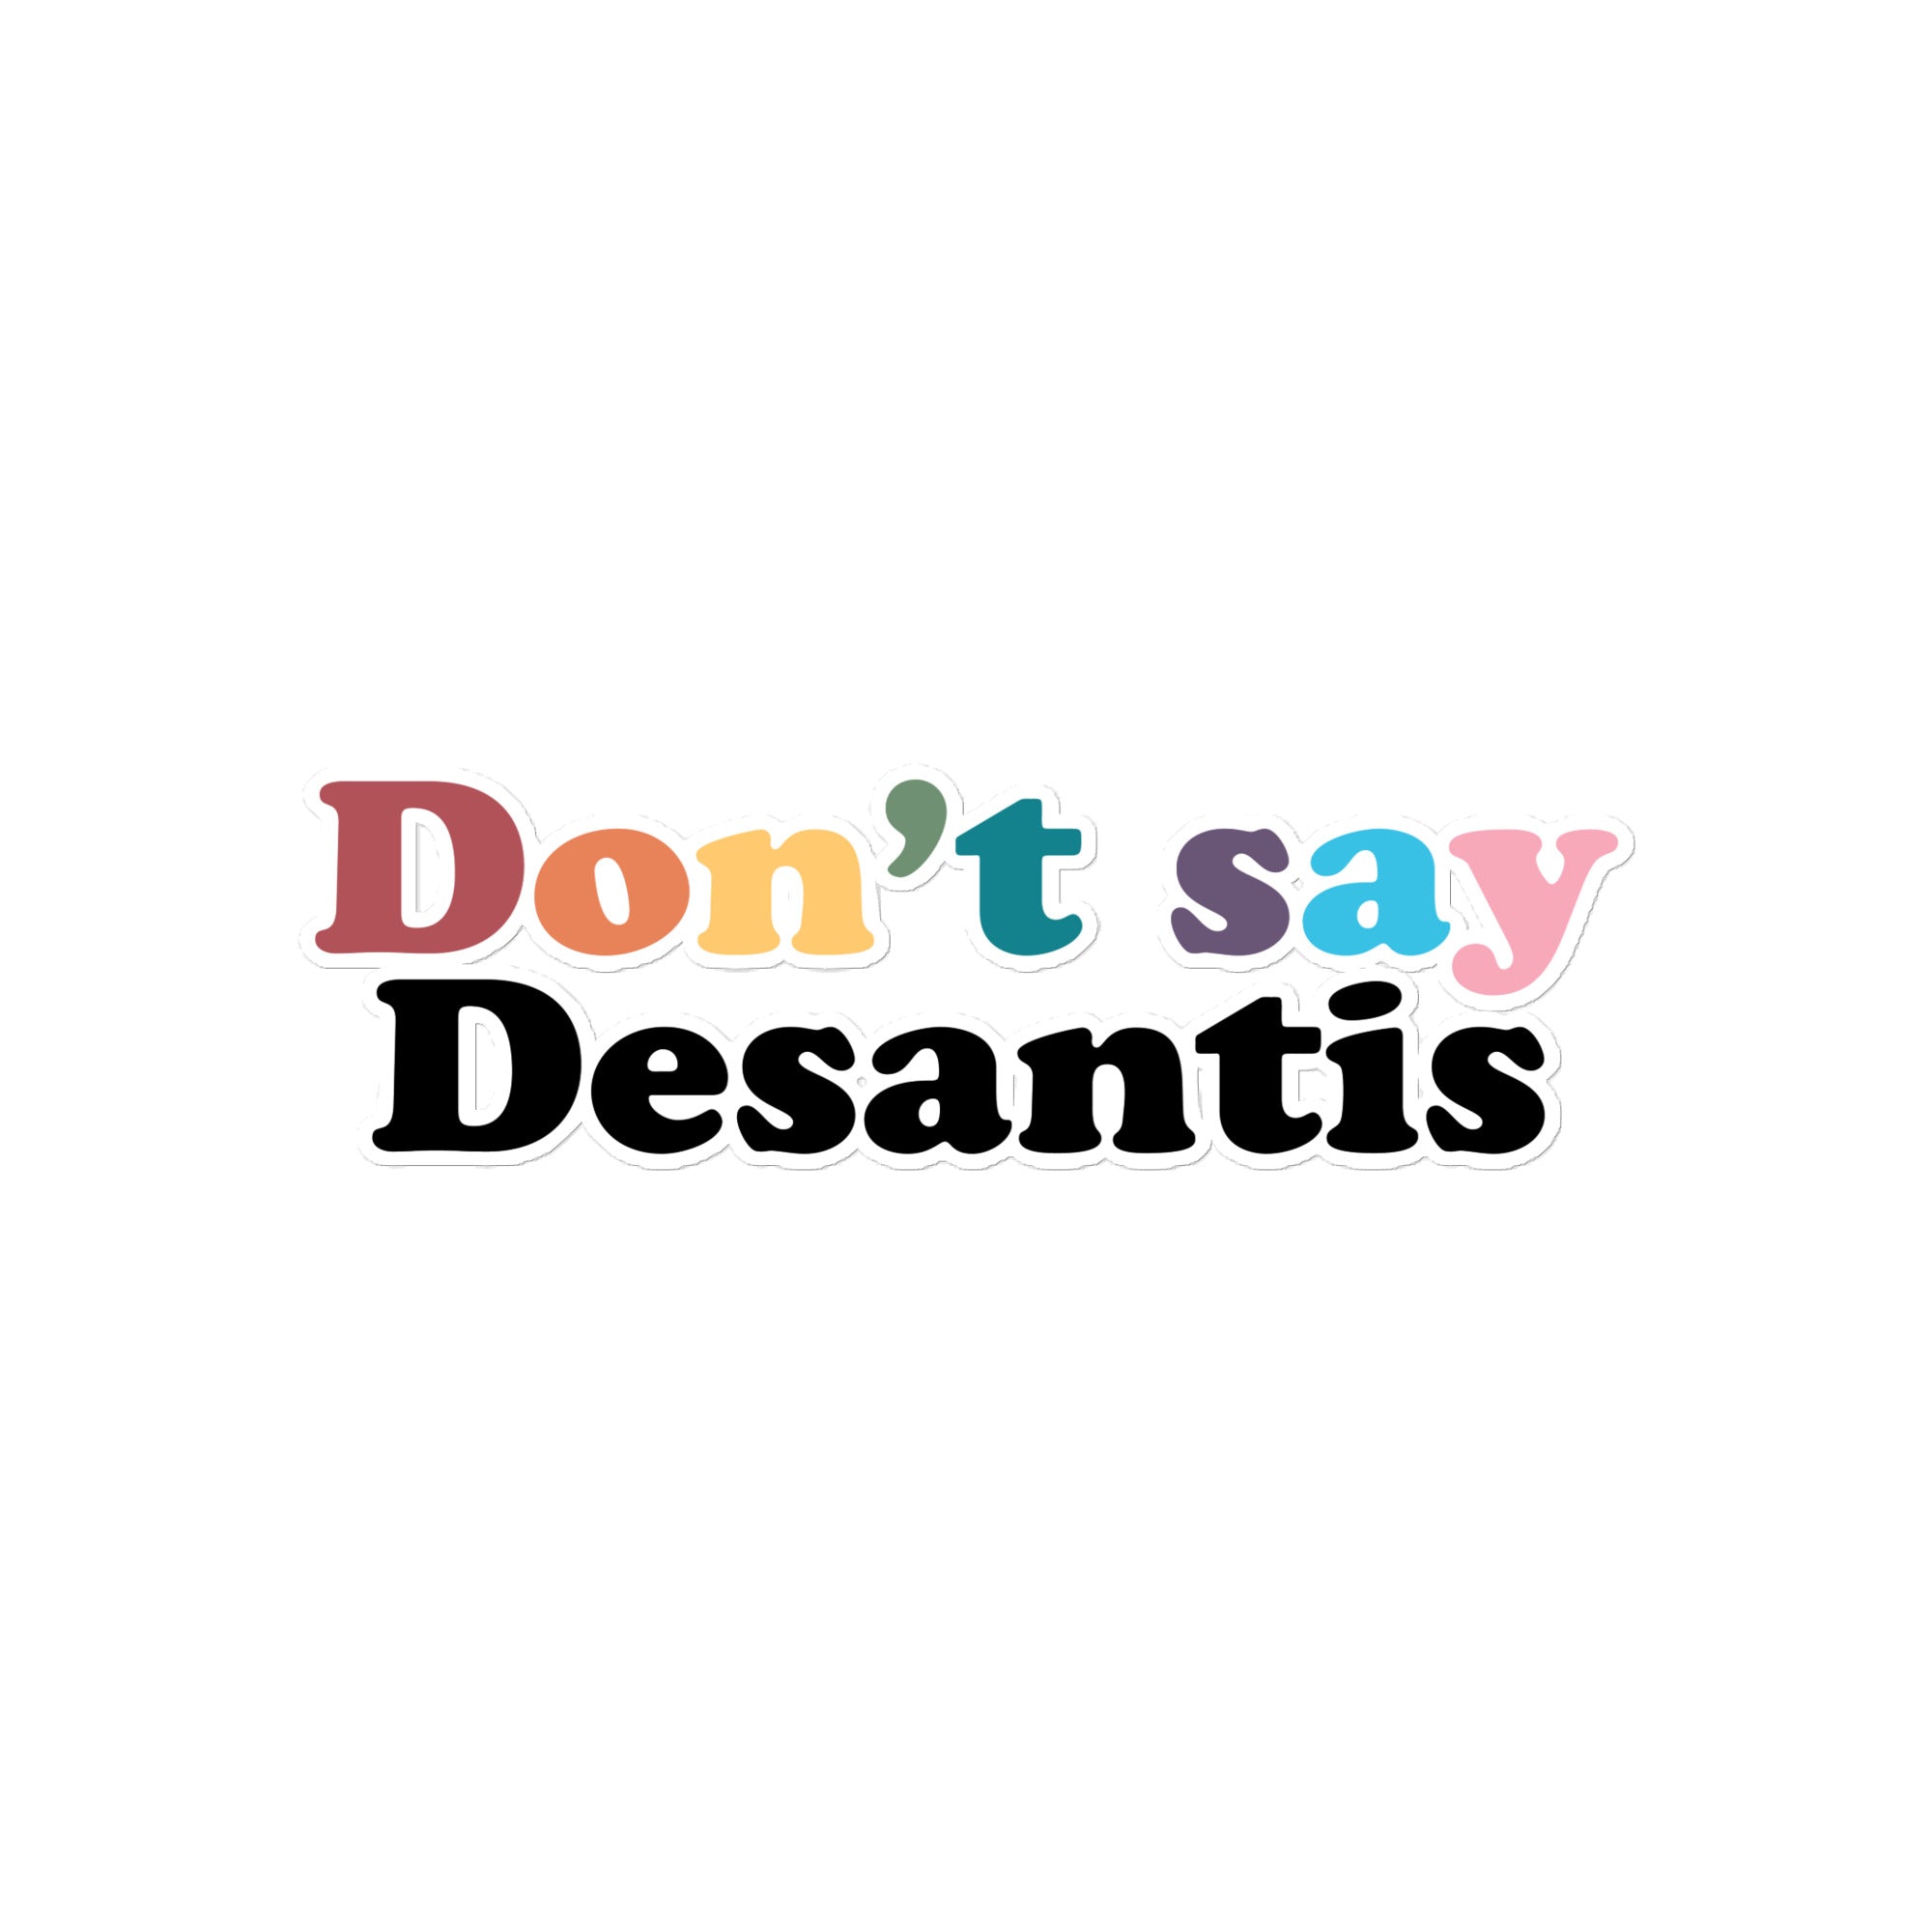 Don't Say Desantis Stickers